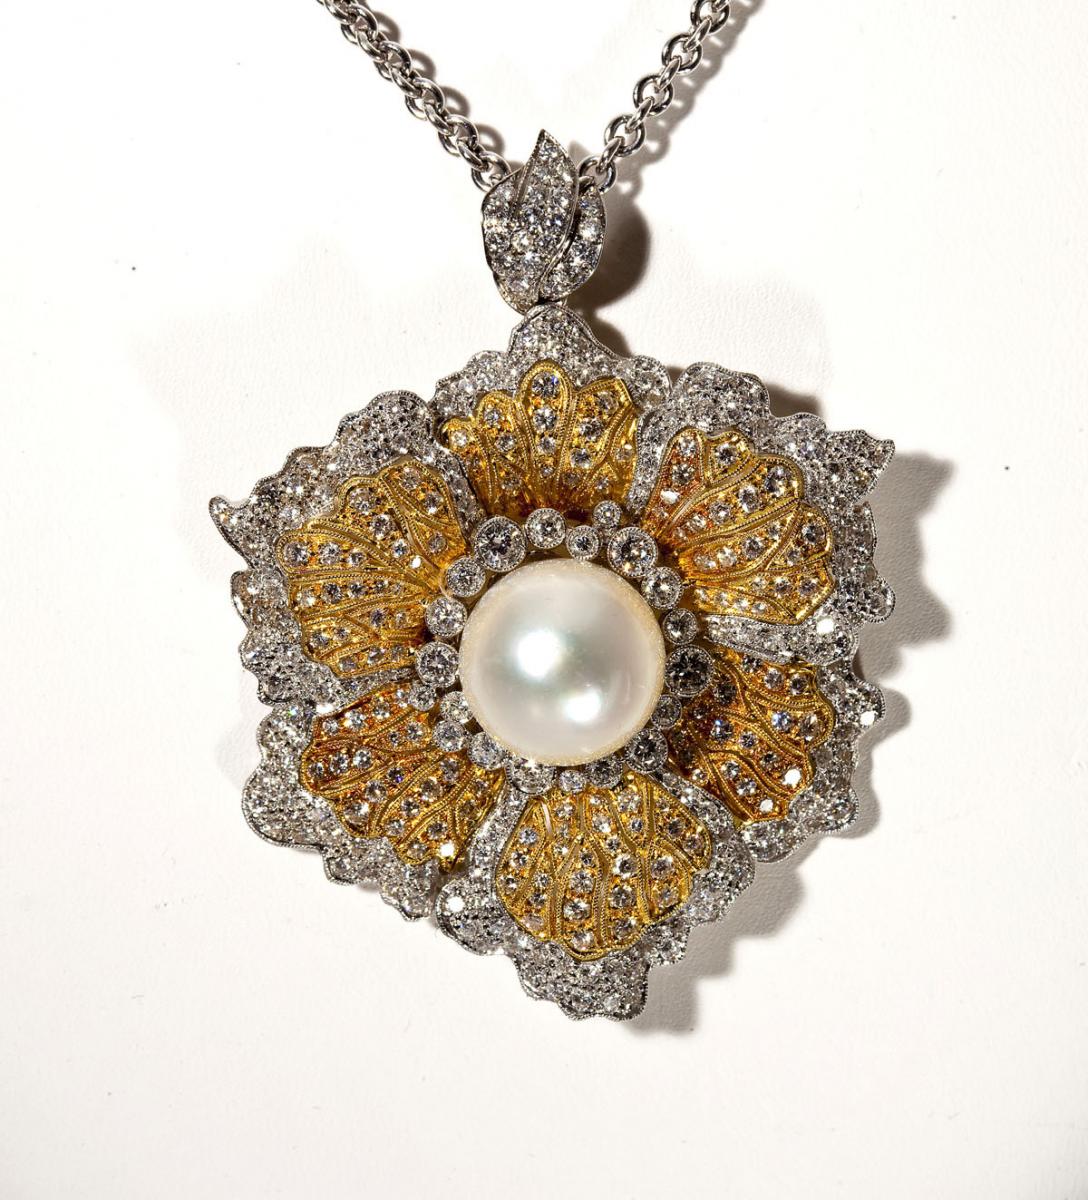 5.9 ctw Diamond & Pearl Pendant ($5,000-10,000)